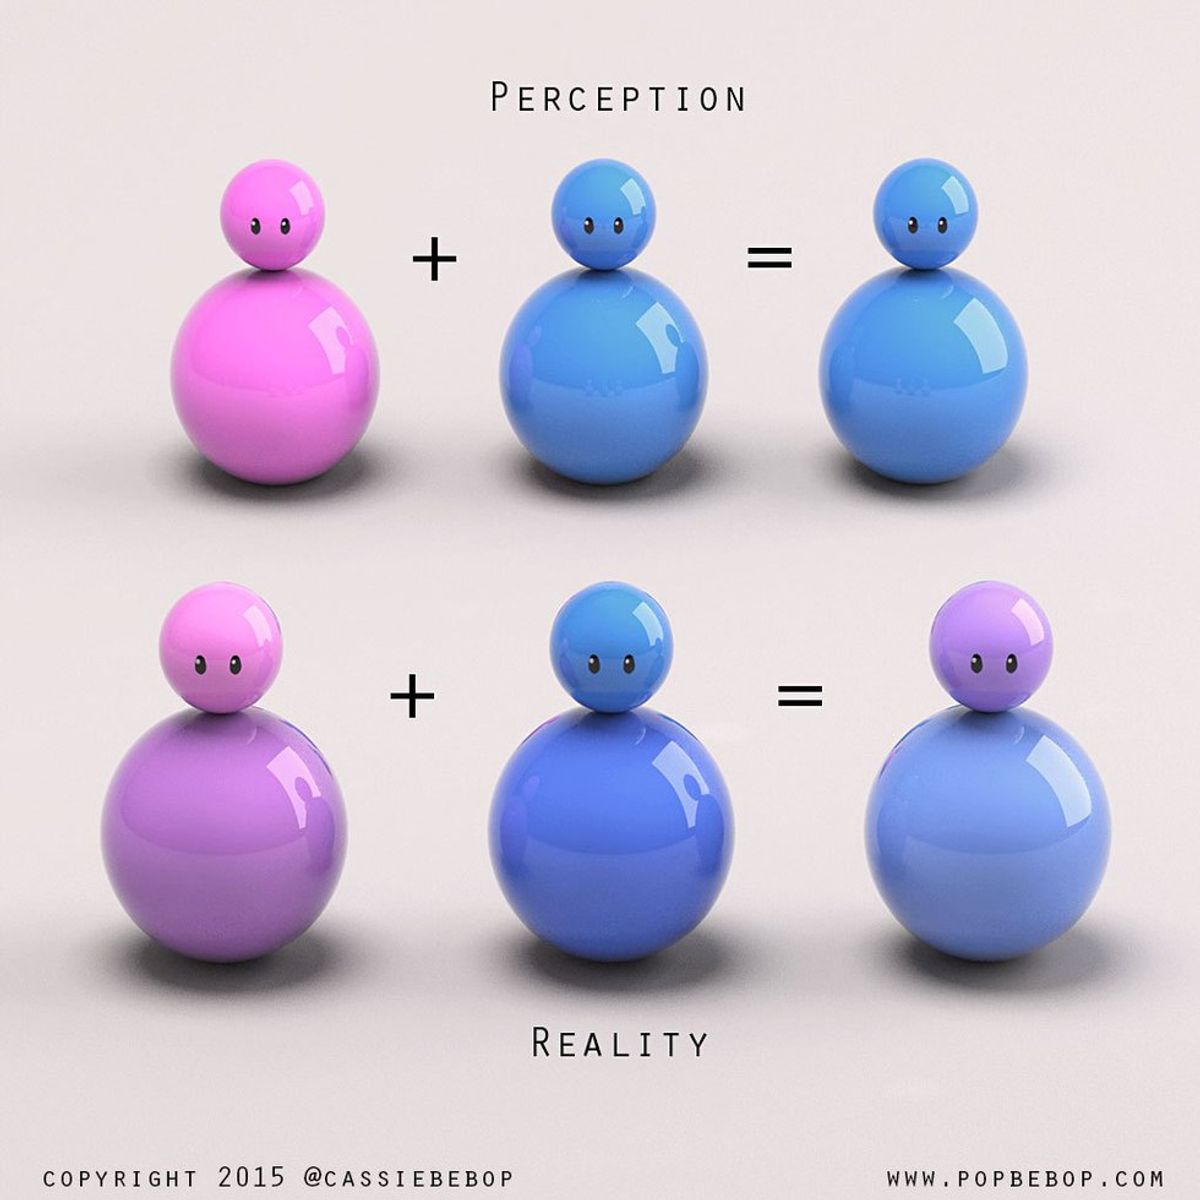 Perception Vs. Reality